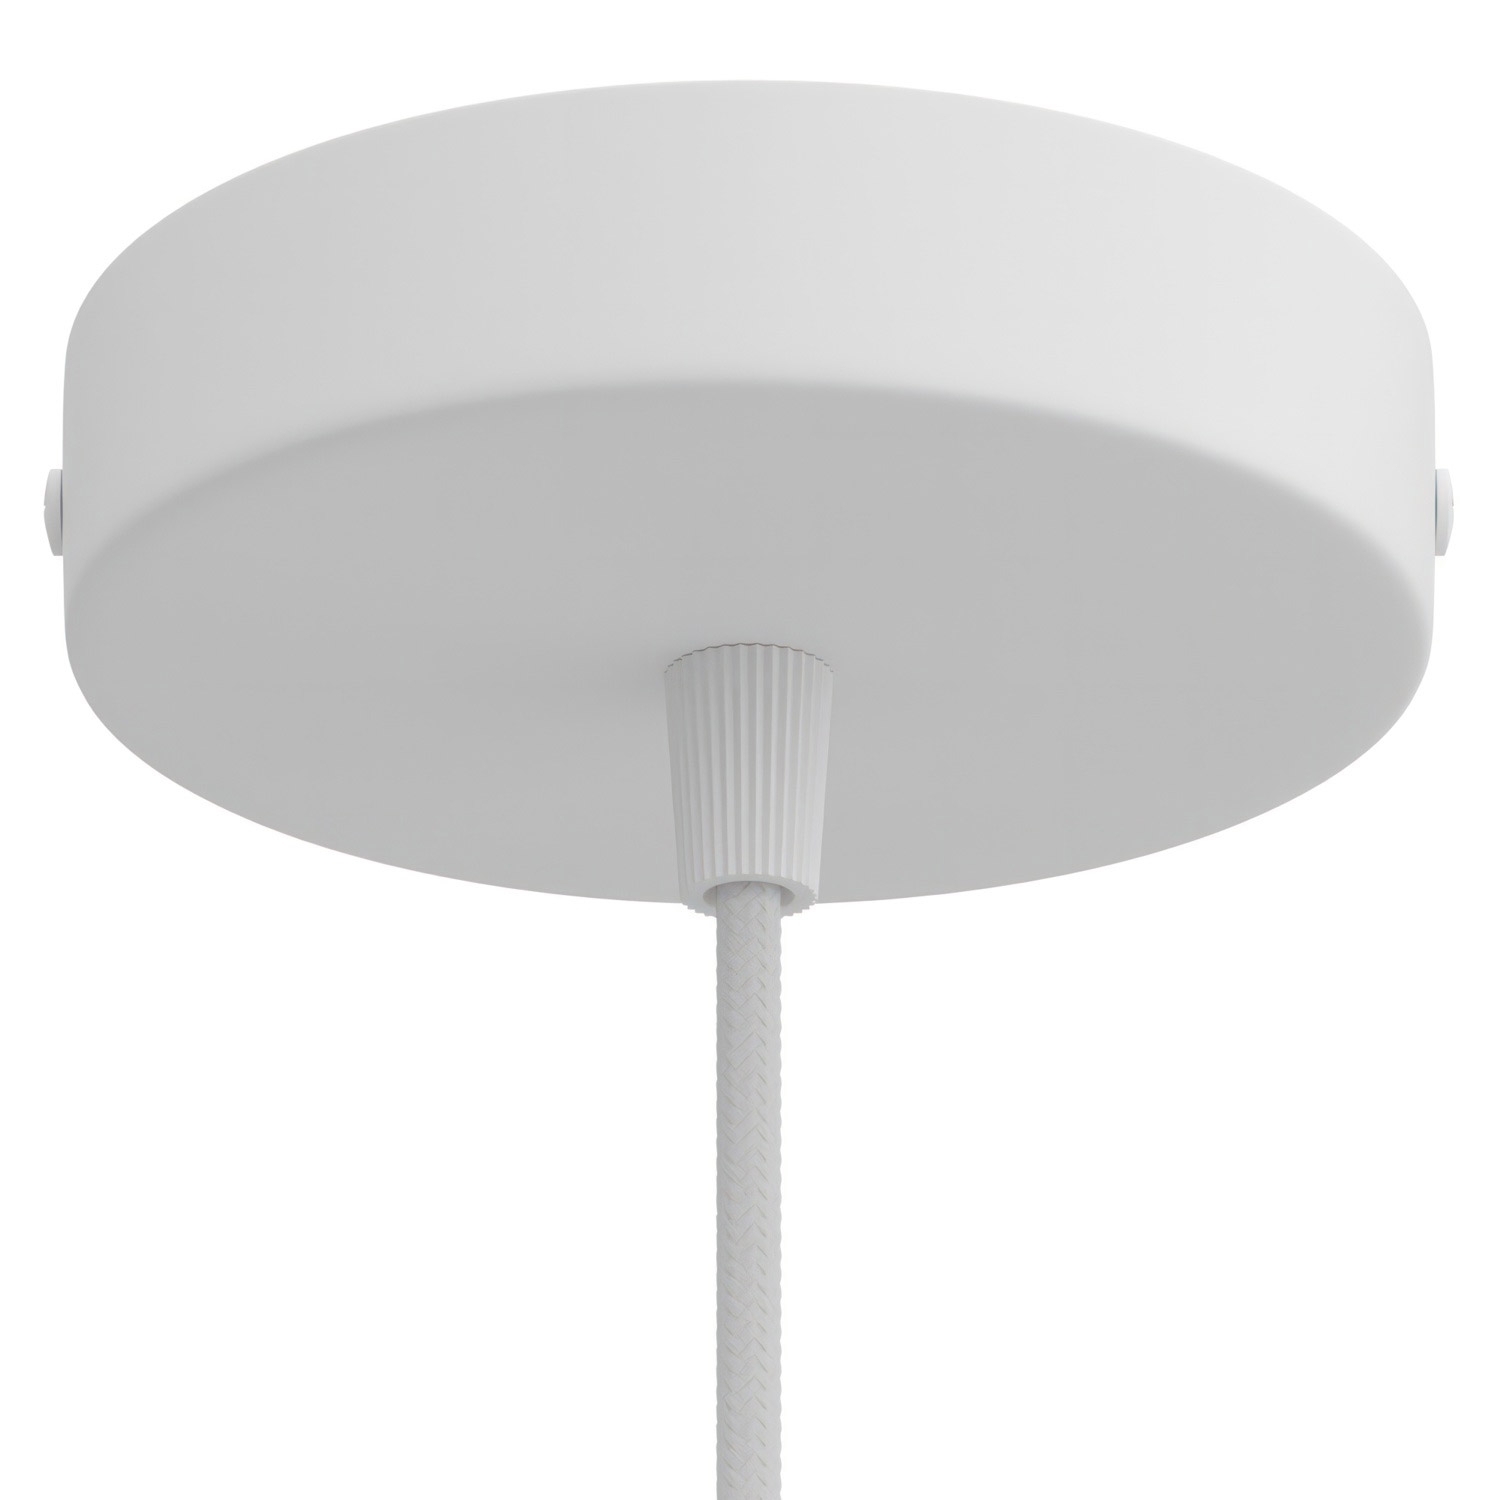 Pendant Light Cord for shade: AU Standard 27mm B22 White